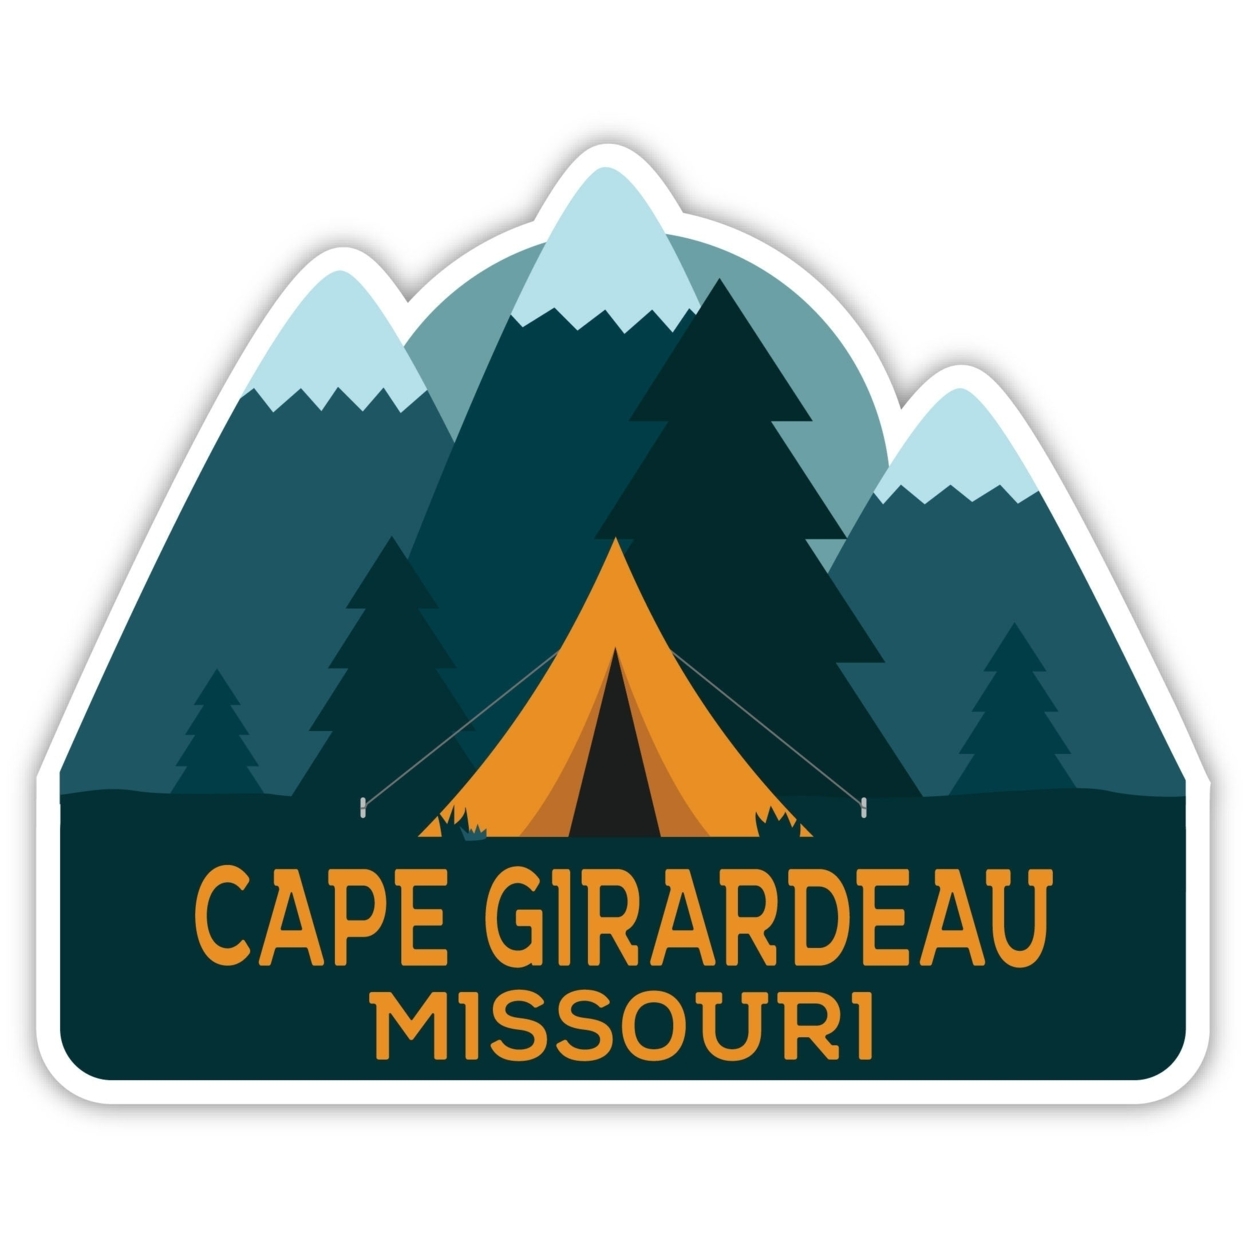 Cape Girardeau Missouri Souvenir Decorative Stickers (Choose Theme And Size) - Single Unit, 8-Inch, Tent